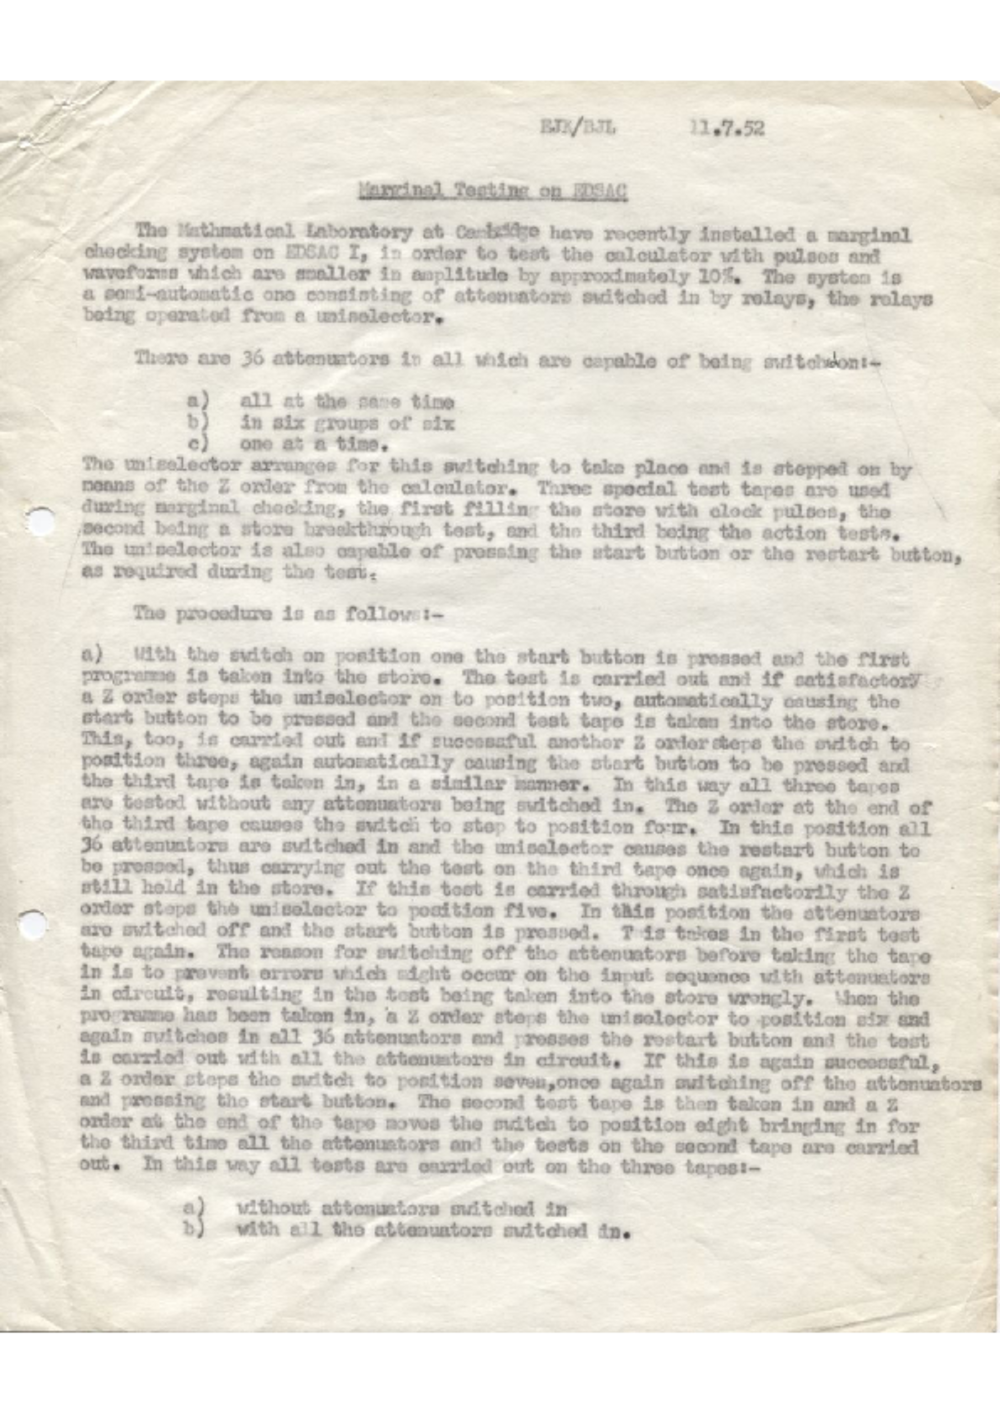 Article: 54873 Marginal Testing on EDSAC, Jul 1952